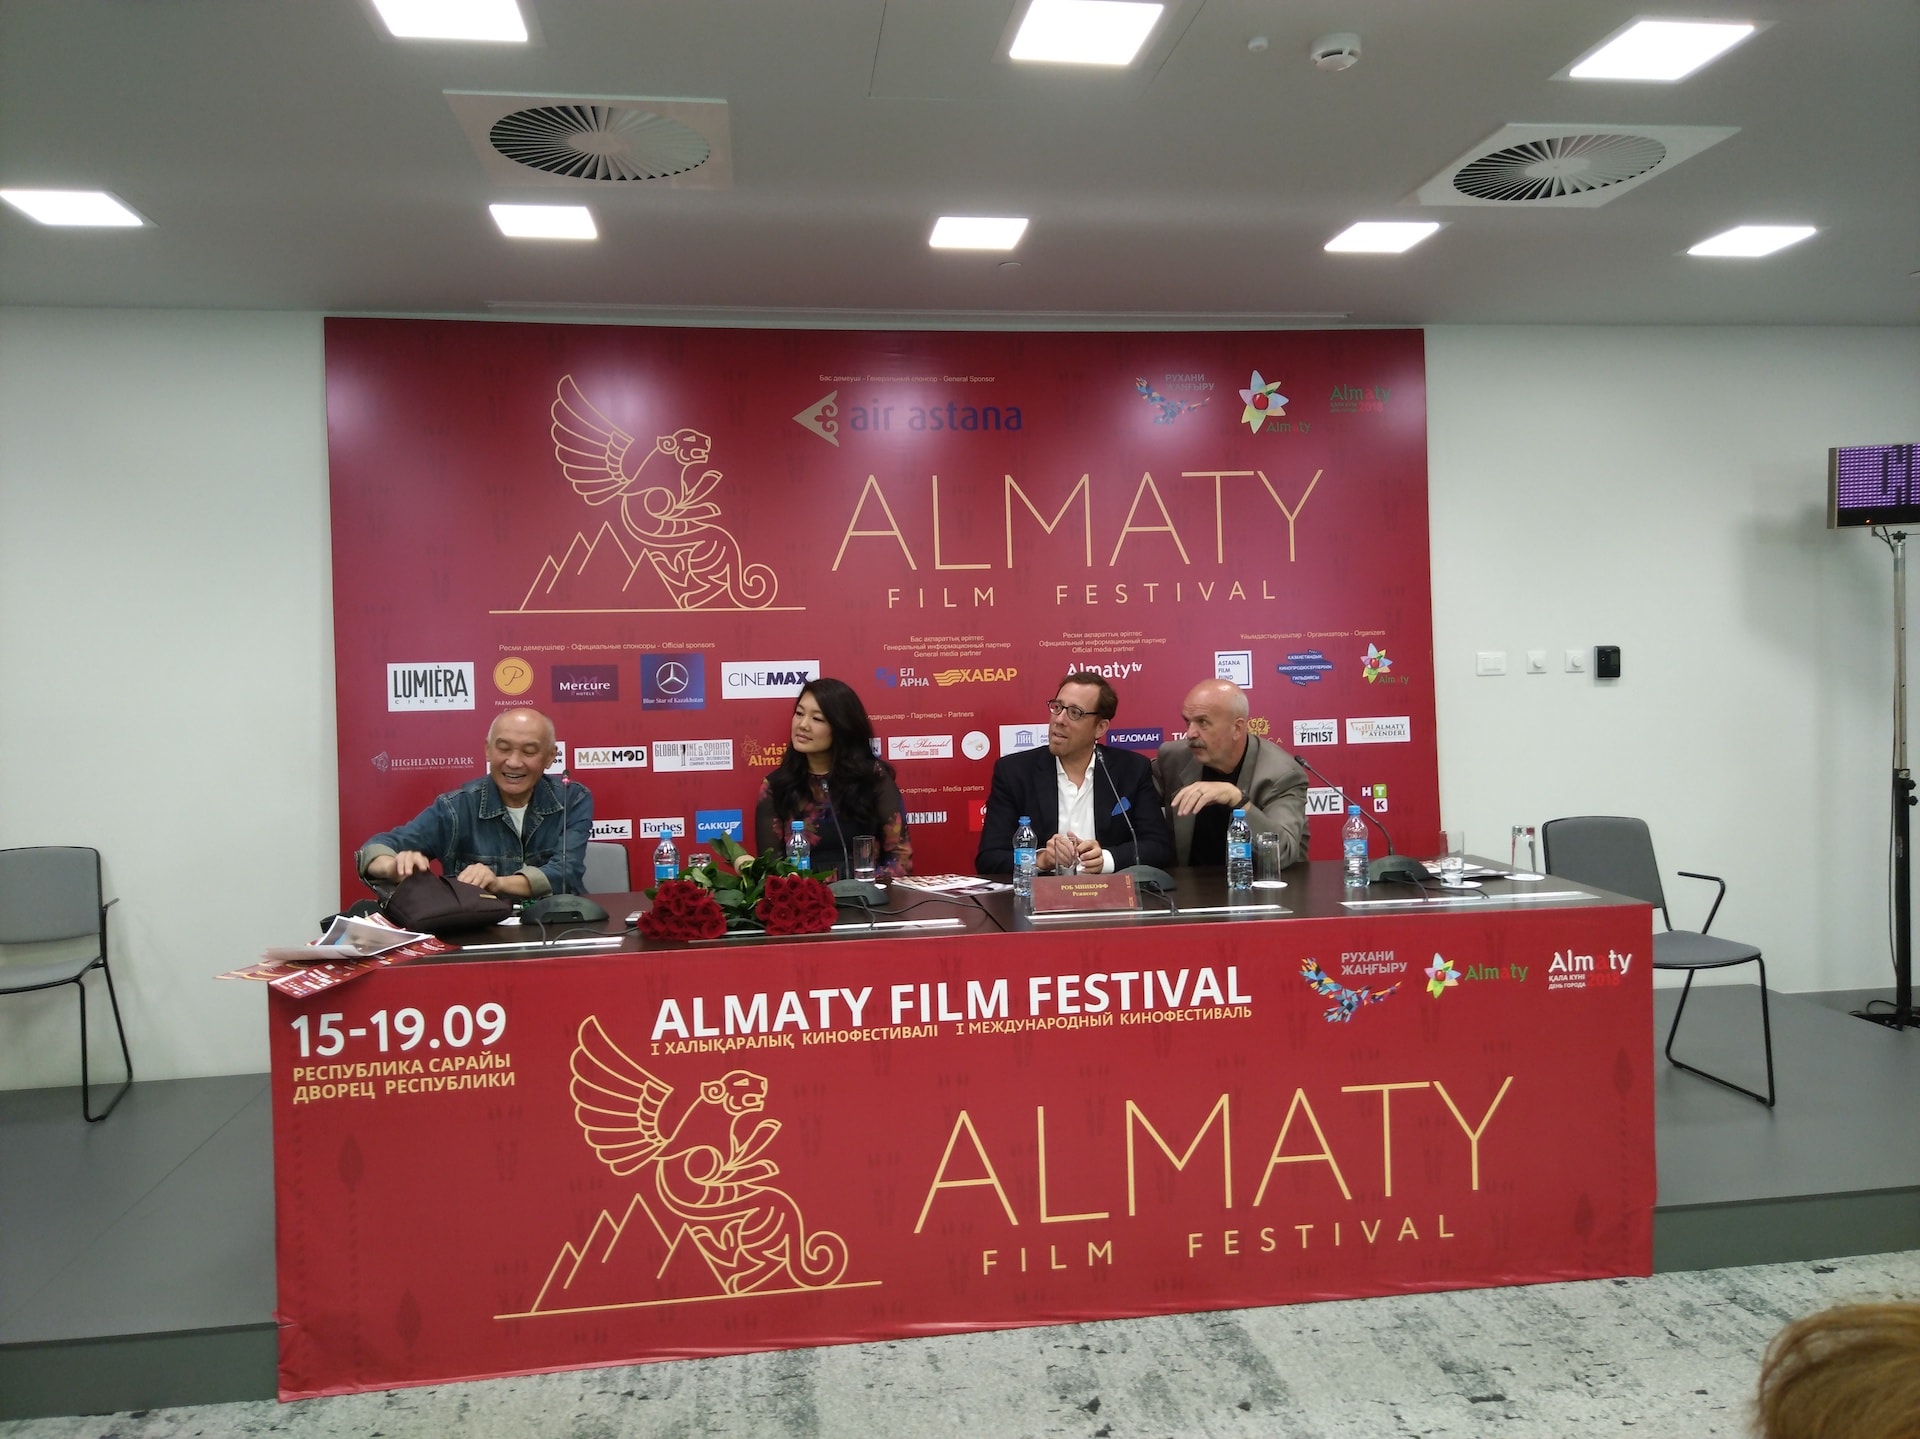 Almaty Film Festival 2018